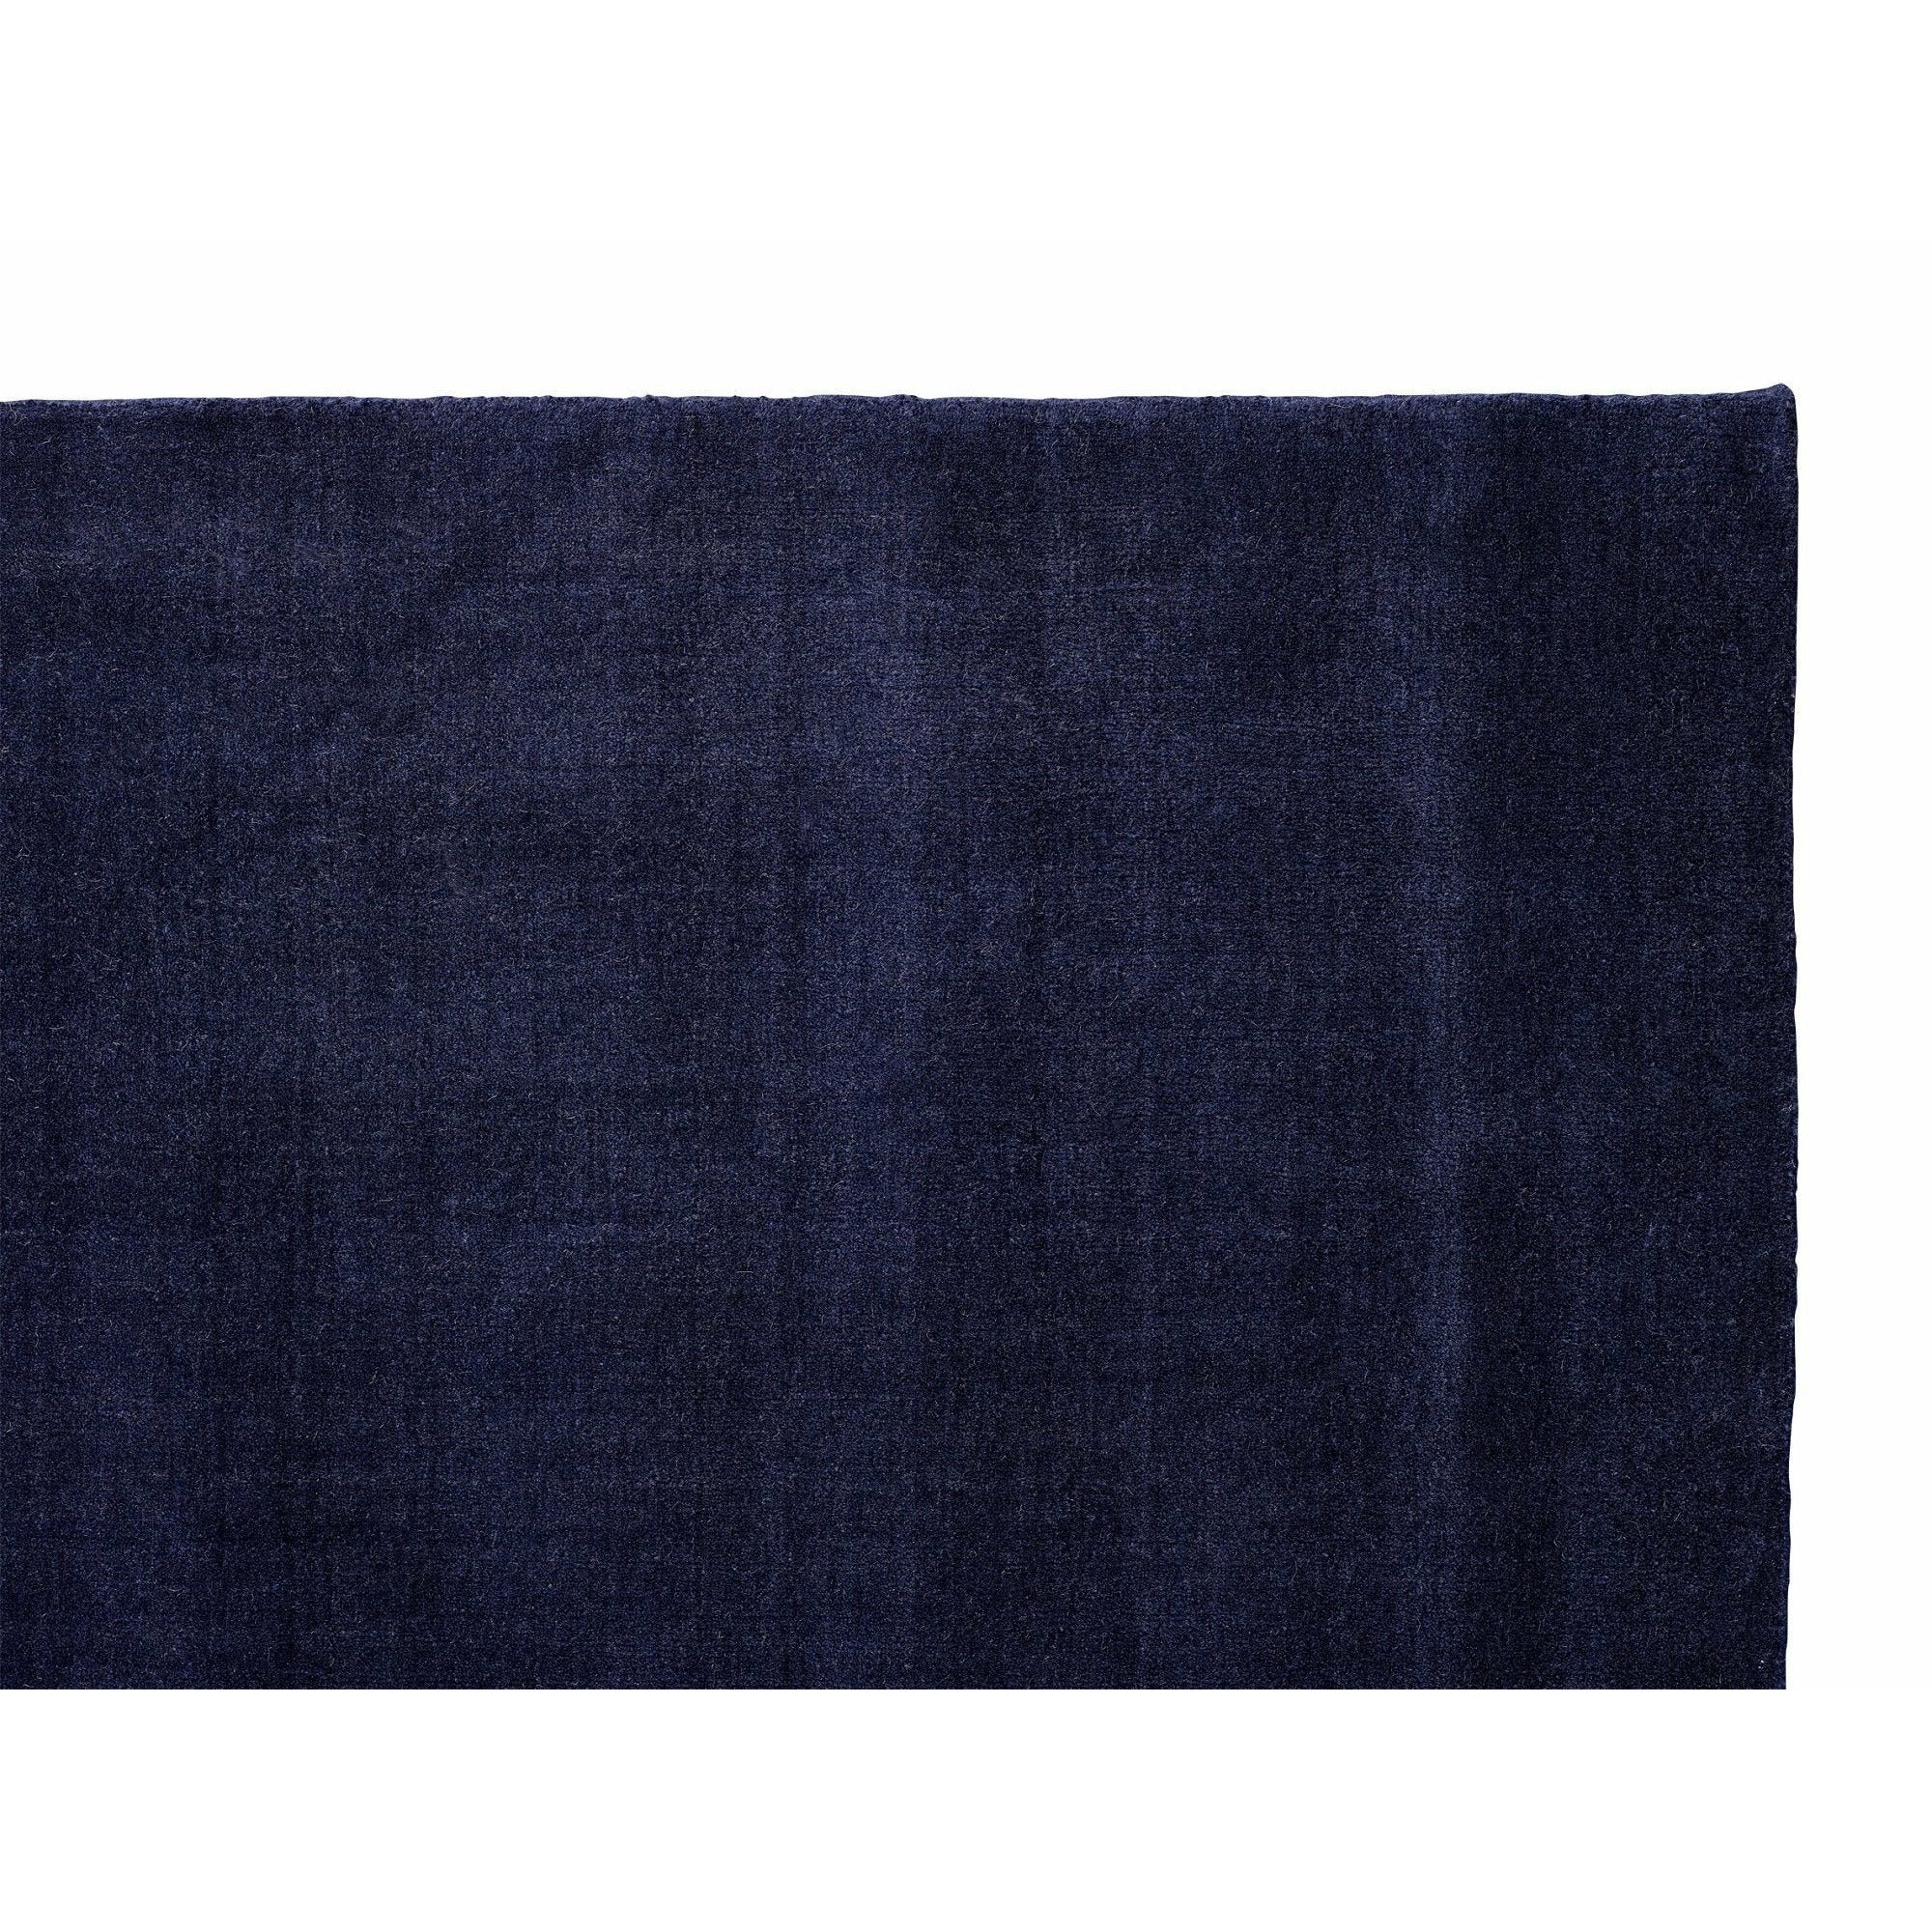 Massimo Earth bambus koberec živá modrá, 200x300 cm